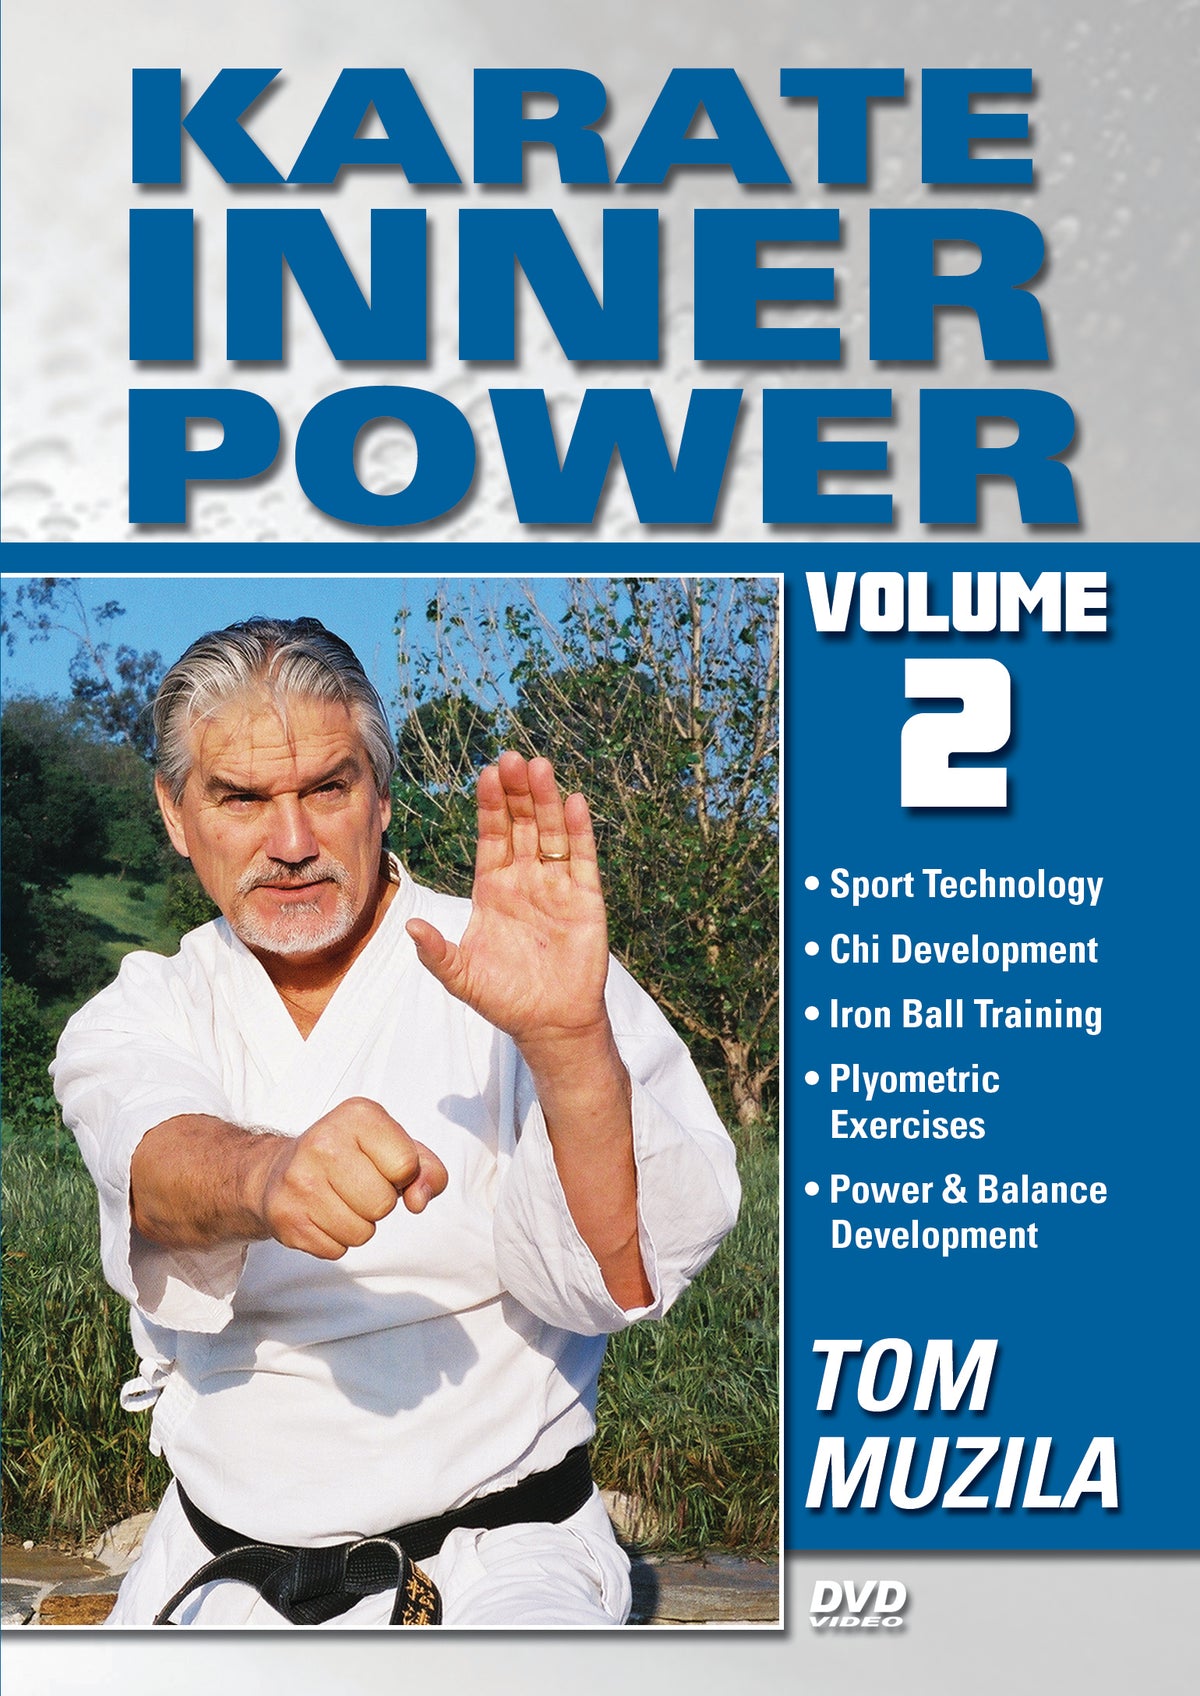 Karate the Inner Power #2 ki chi DVD Tom Muzila plyometric concepts for speed